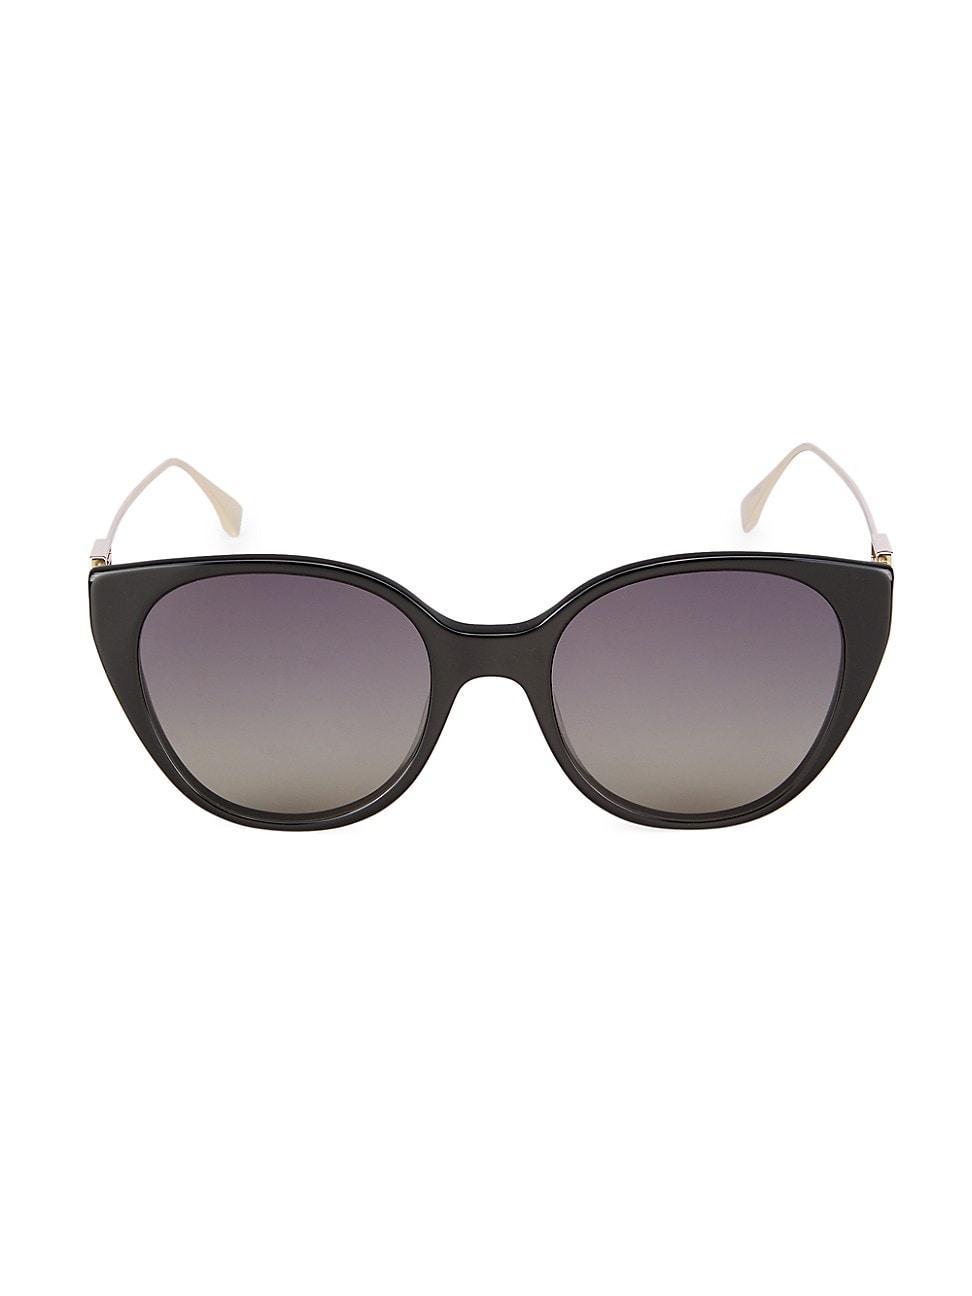 The Fendi Baguette 54mm Round Sunglasses Product Image